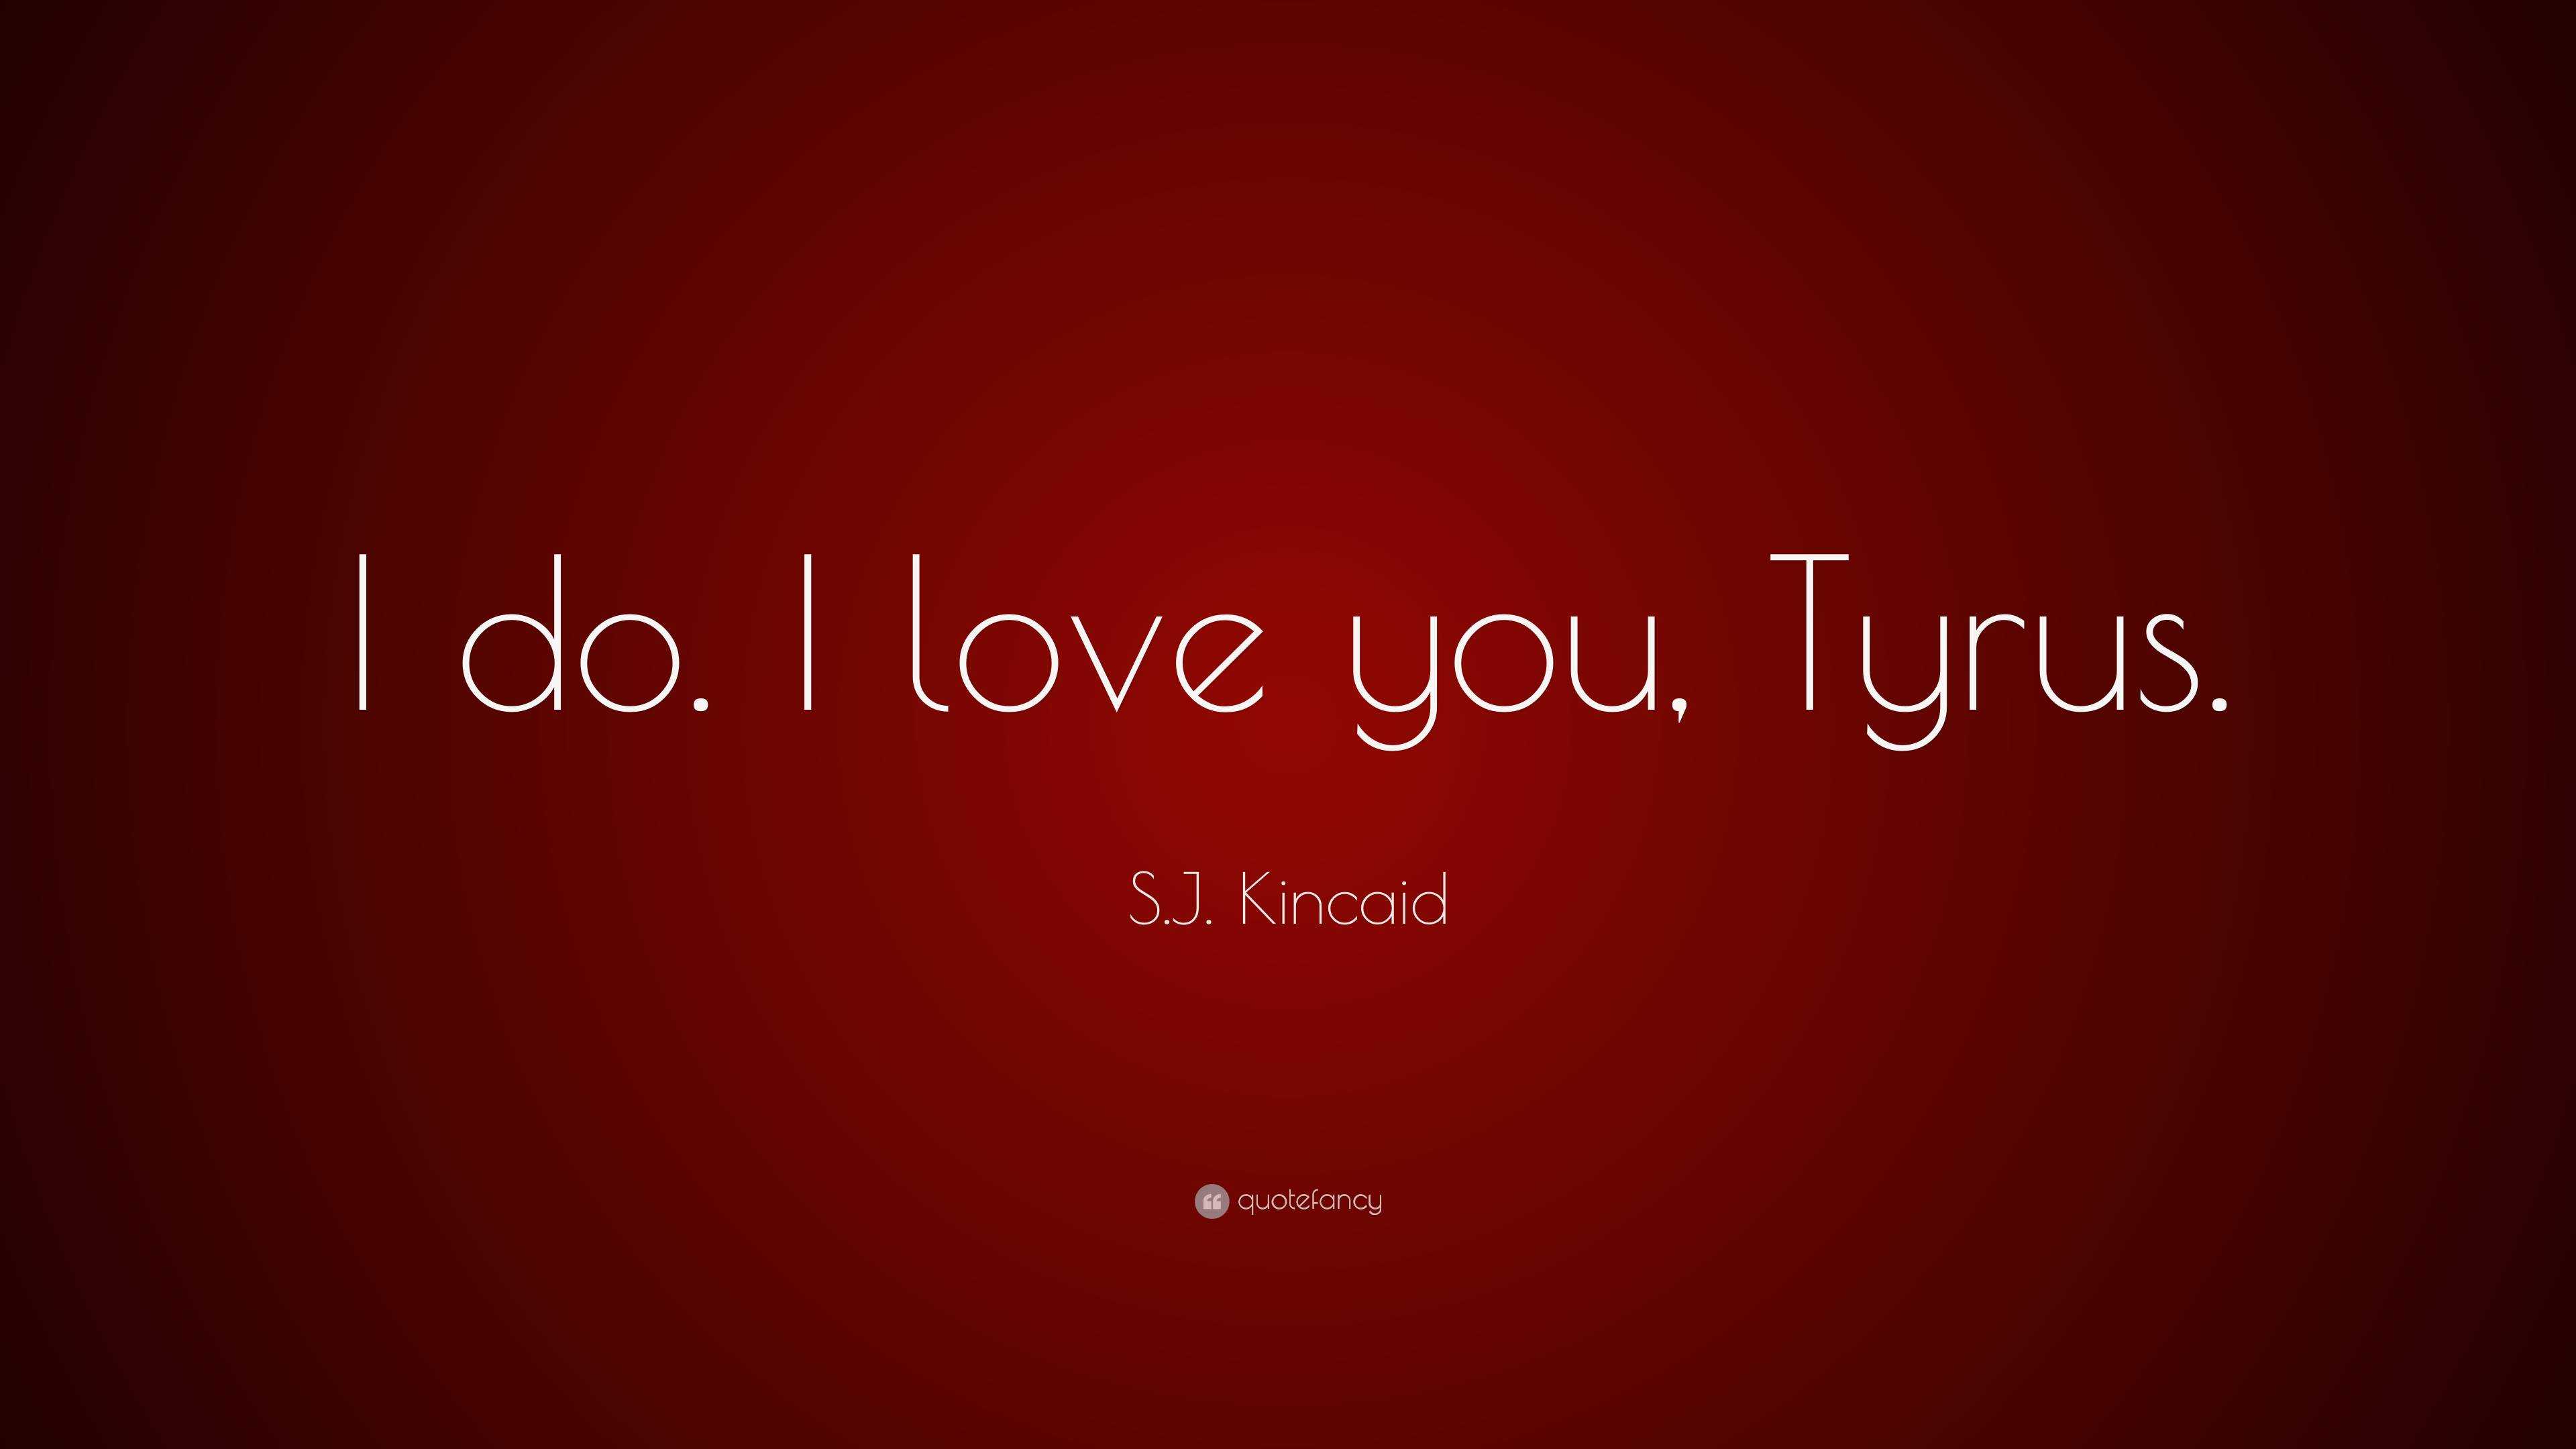 . Kincaid Quote: “I do. I love you, Tyrus.”